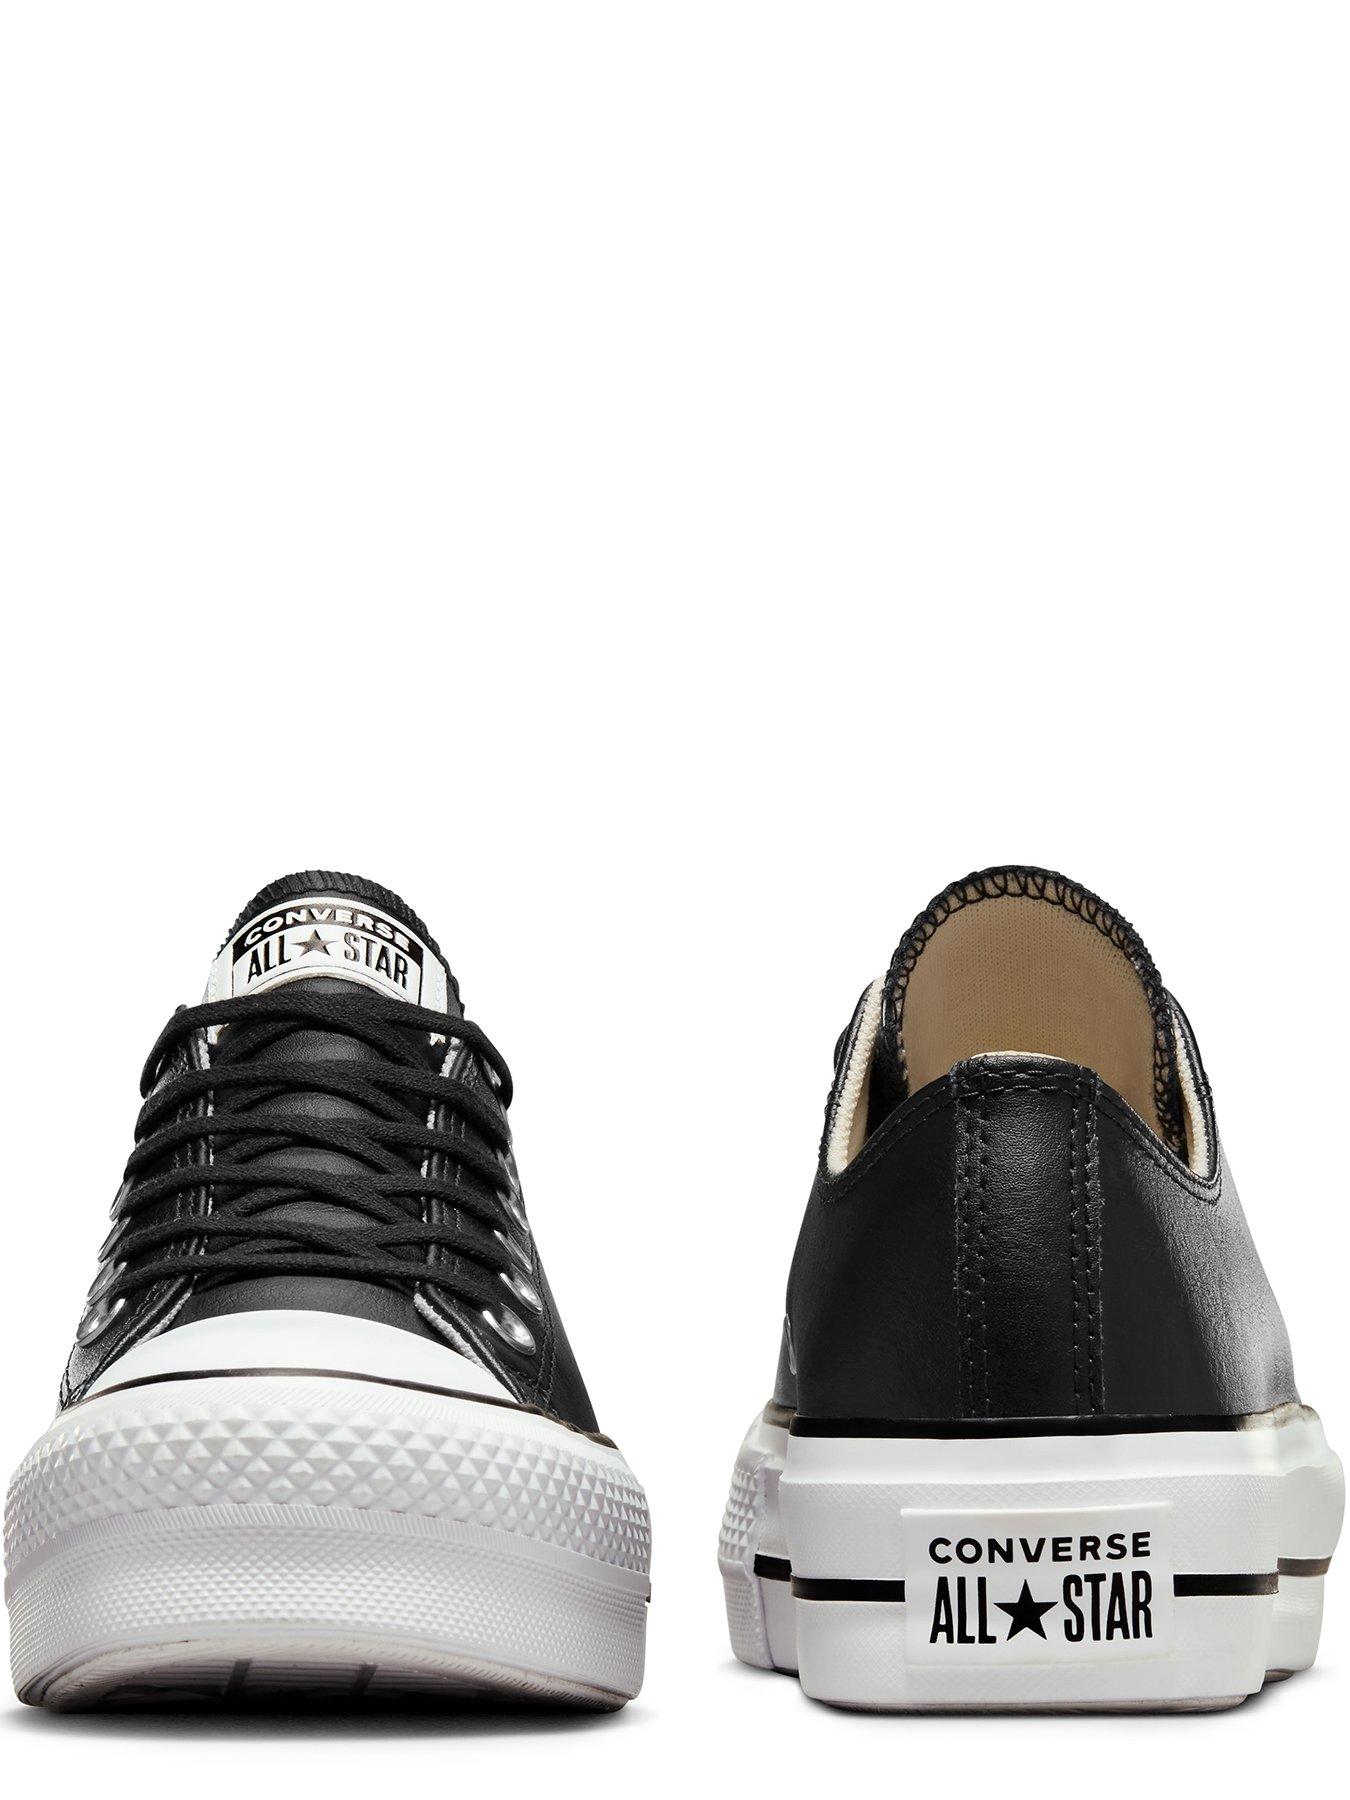 converse platform leather black